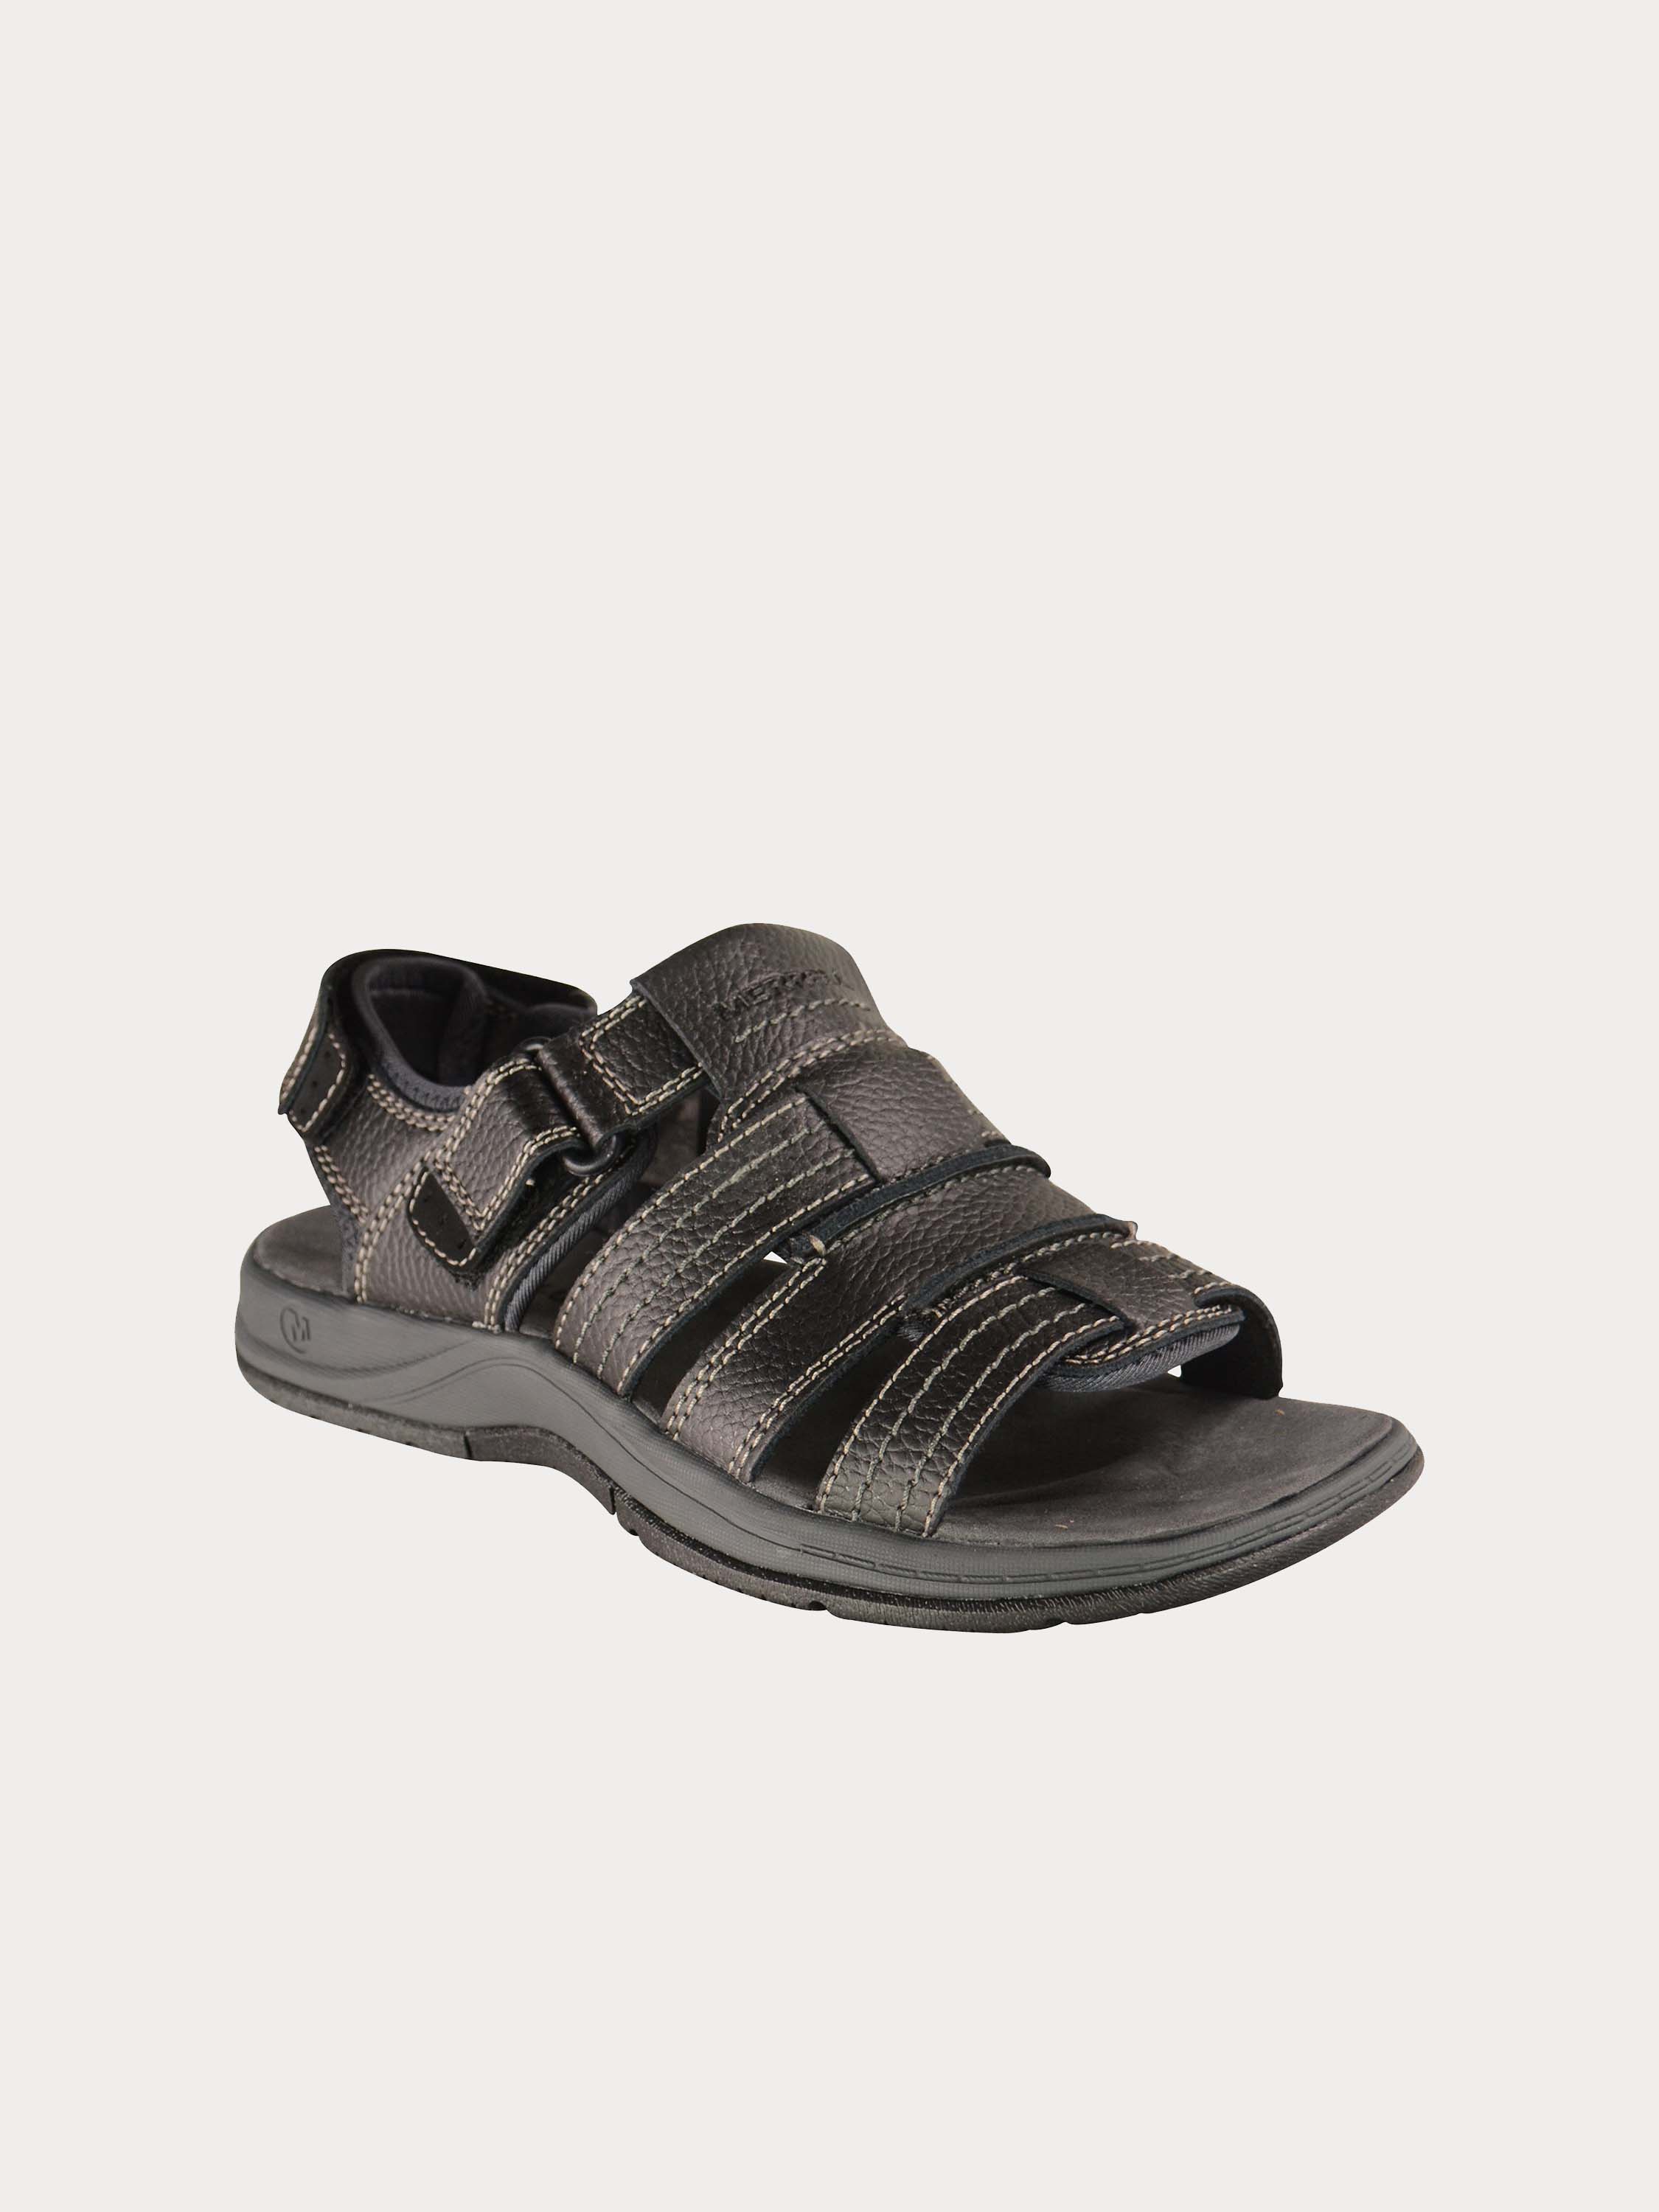 Merrell Men's Outdoor Leather Sandals #color_Black